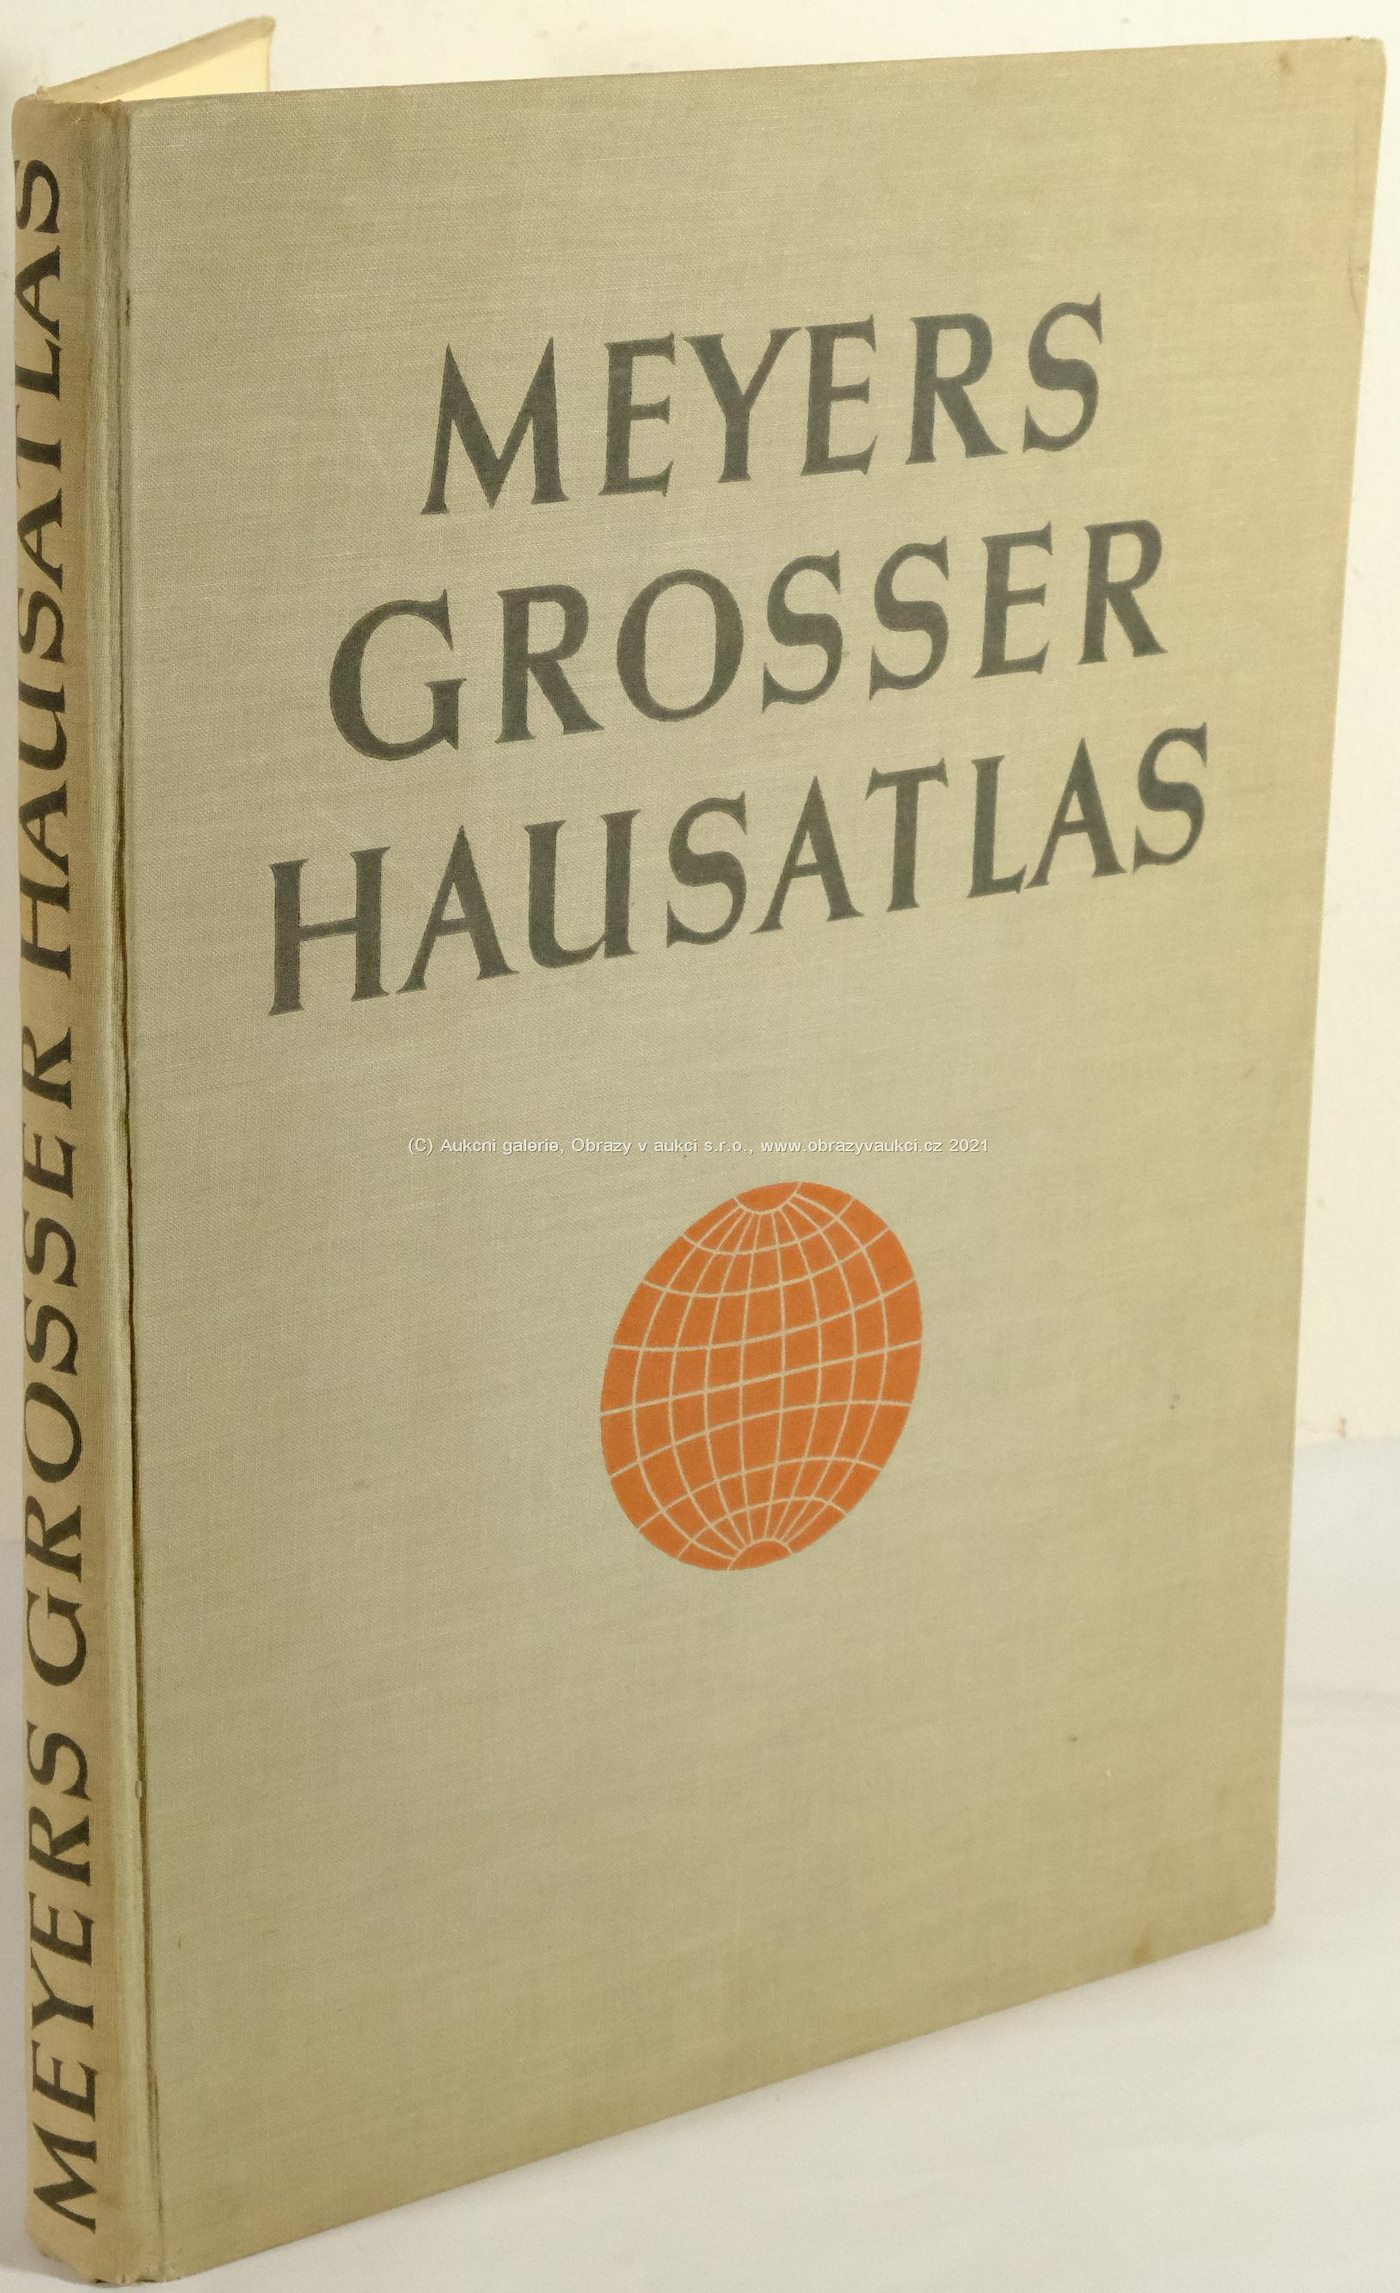 Edgar Lehmann - Meyers Grosser Hausatlas